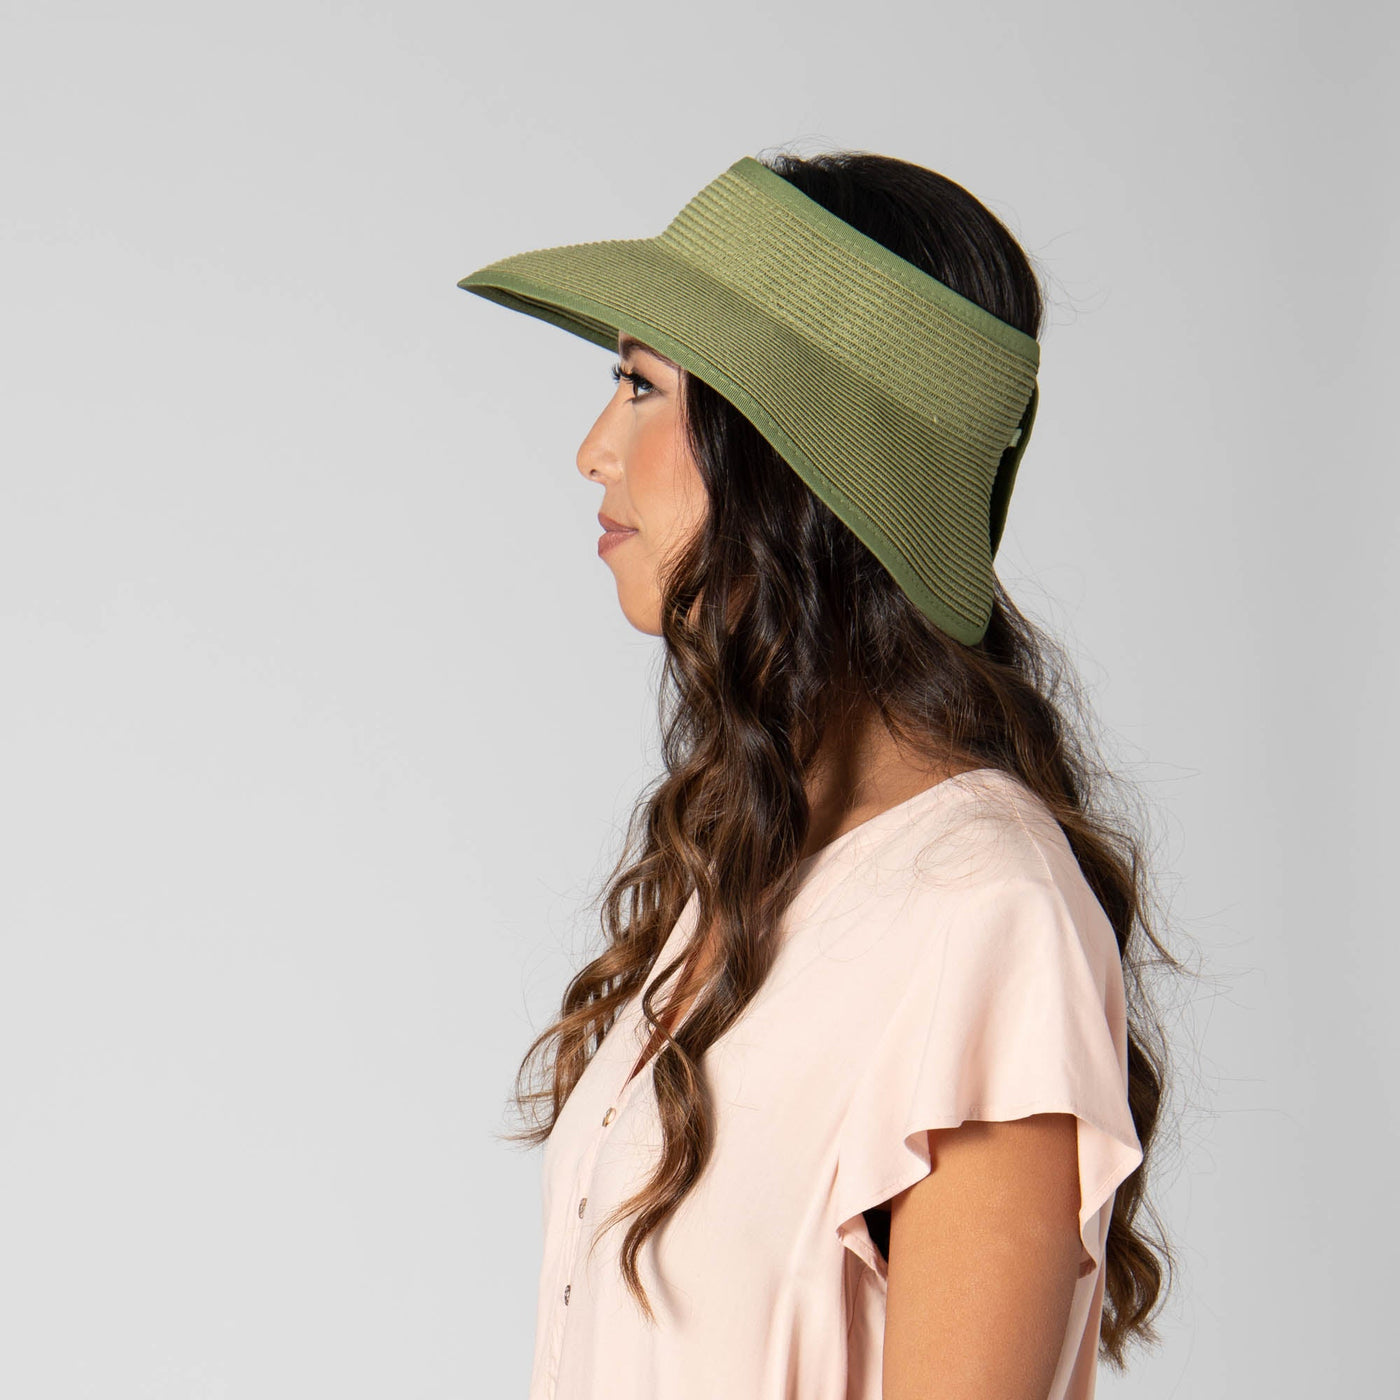 VISOR - San Diego Hat Company's Signature Women's Ultrabraid Large Brim Visor